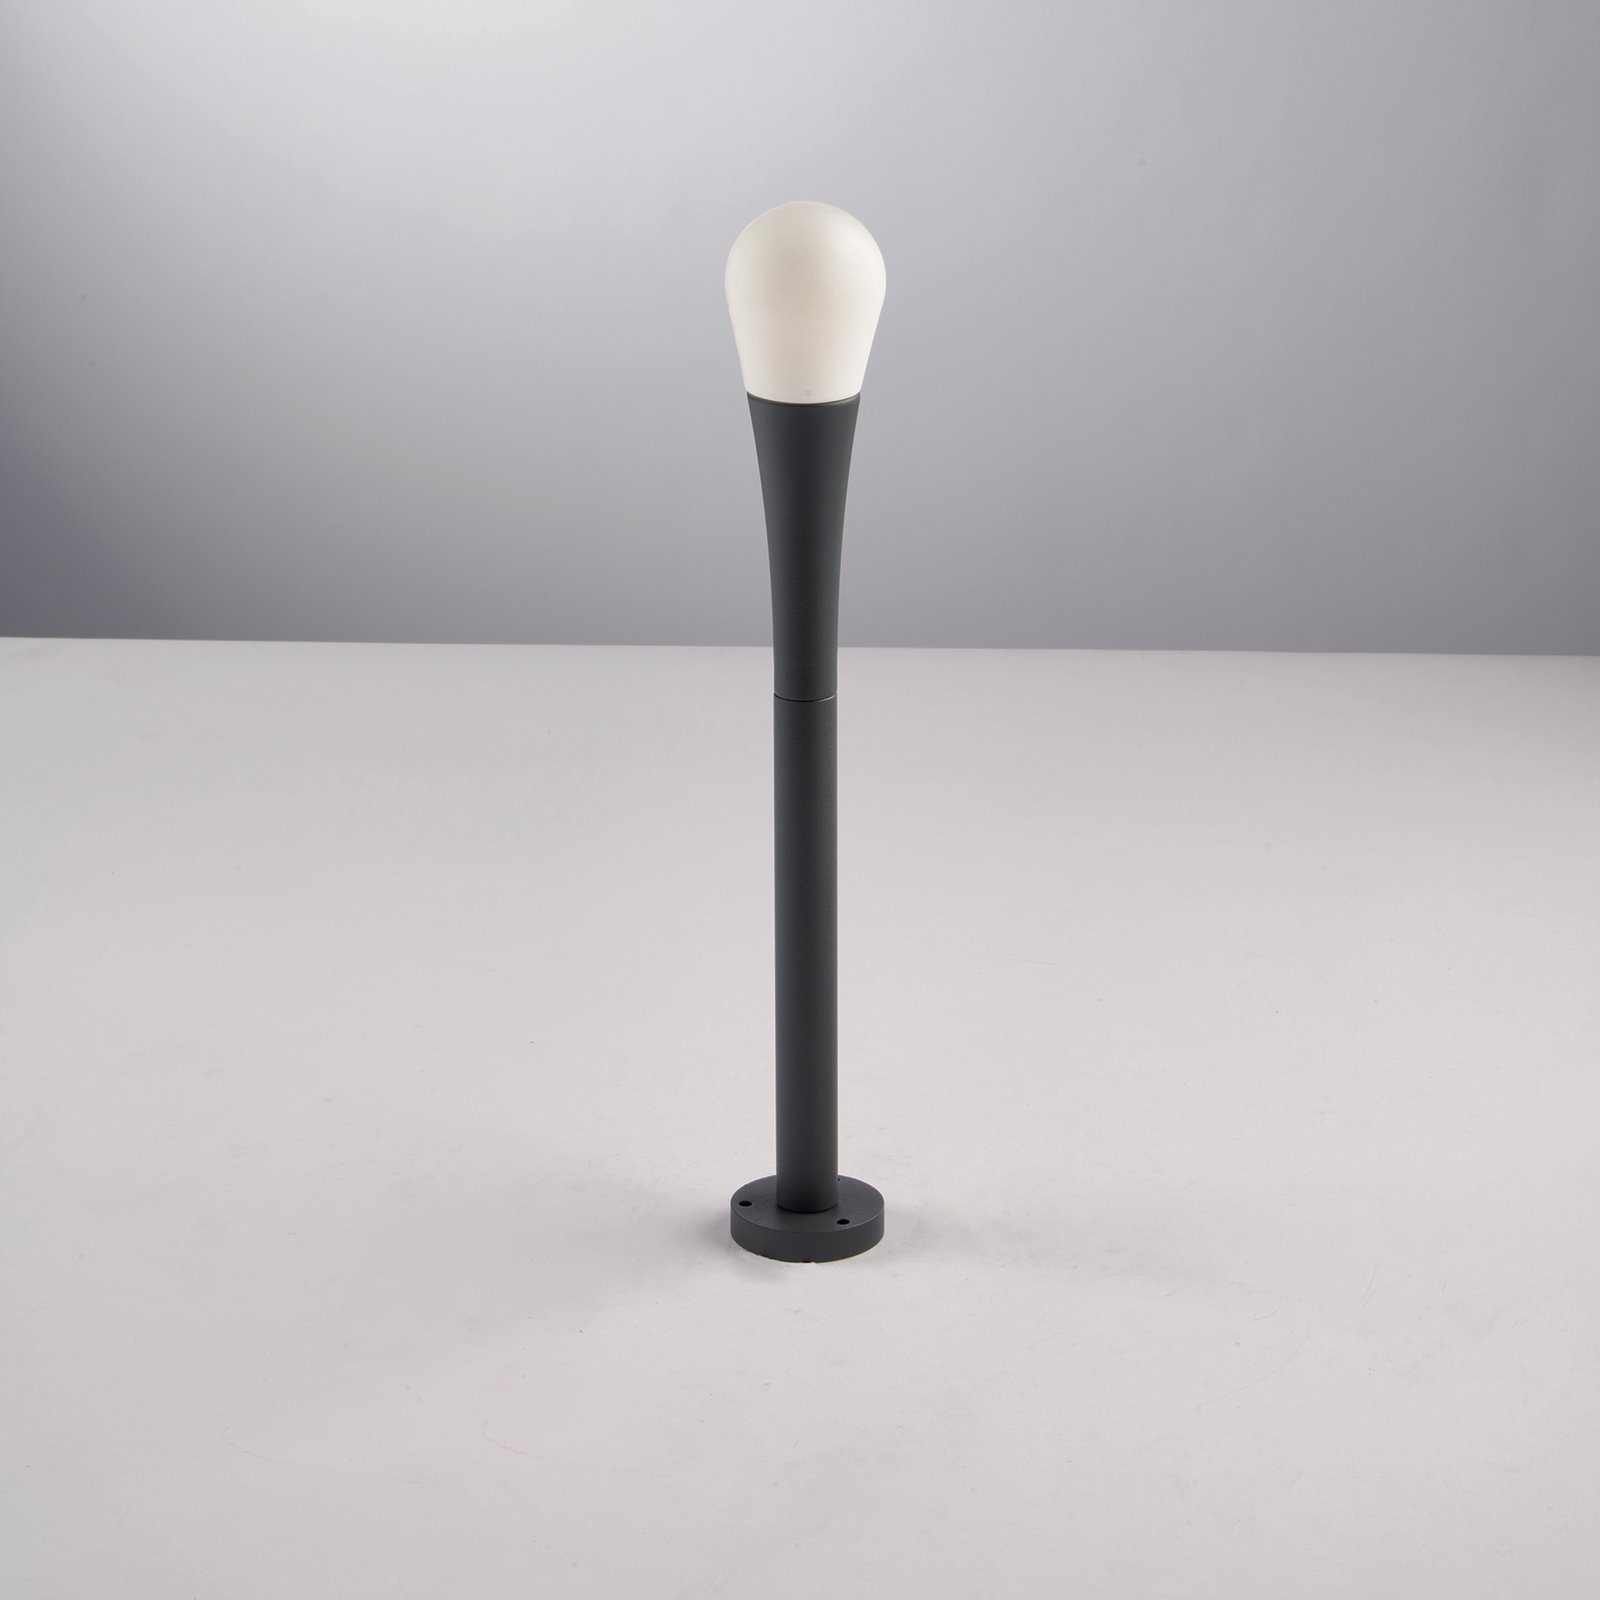 Pillar light Drop IP65, 34 cm high